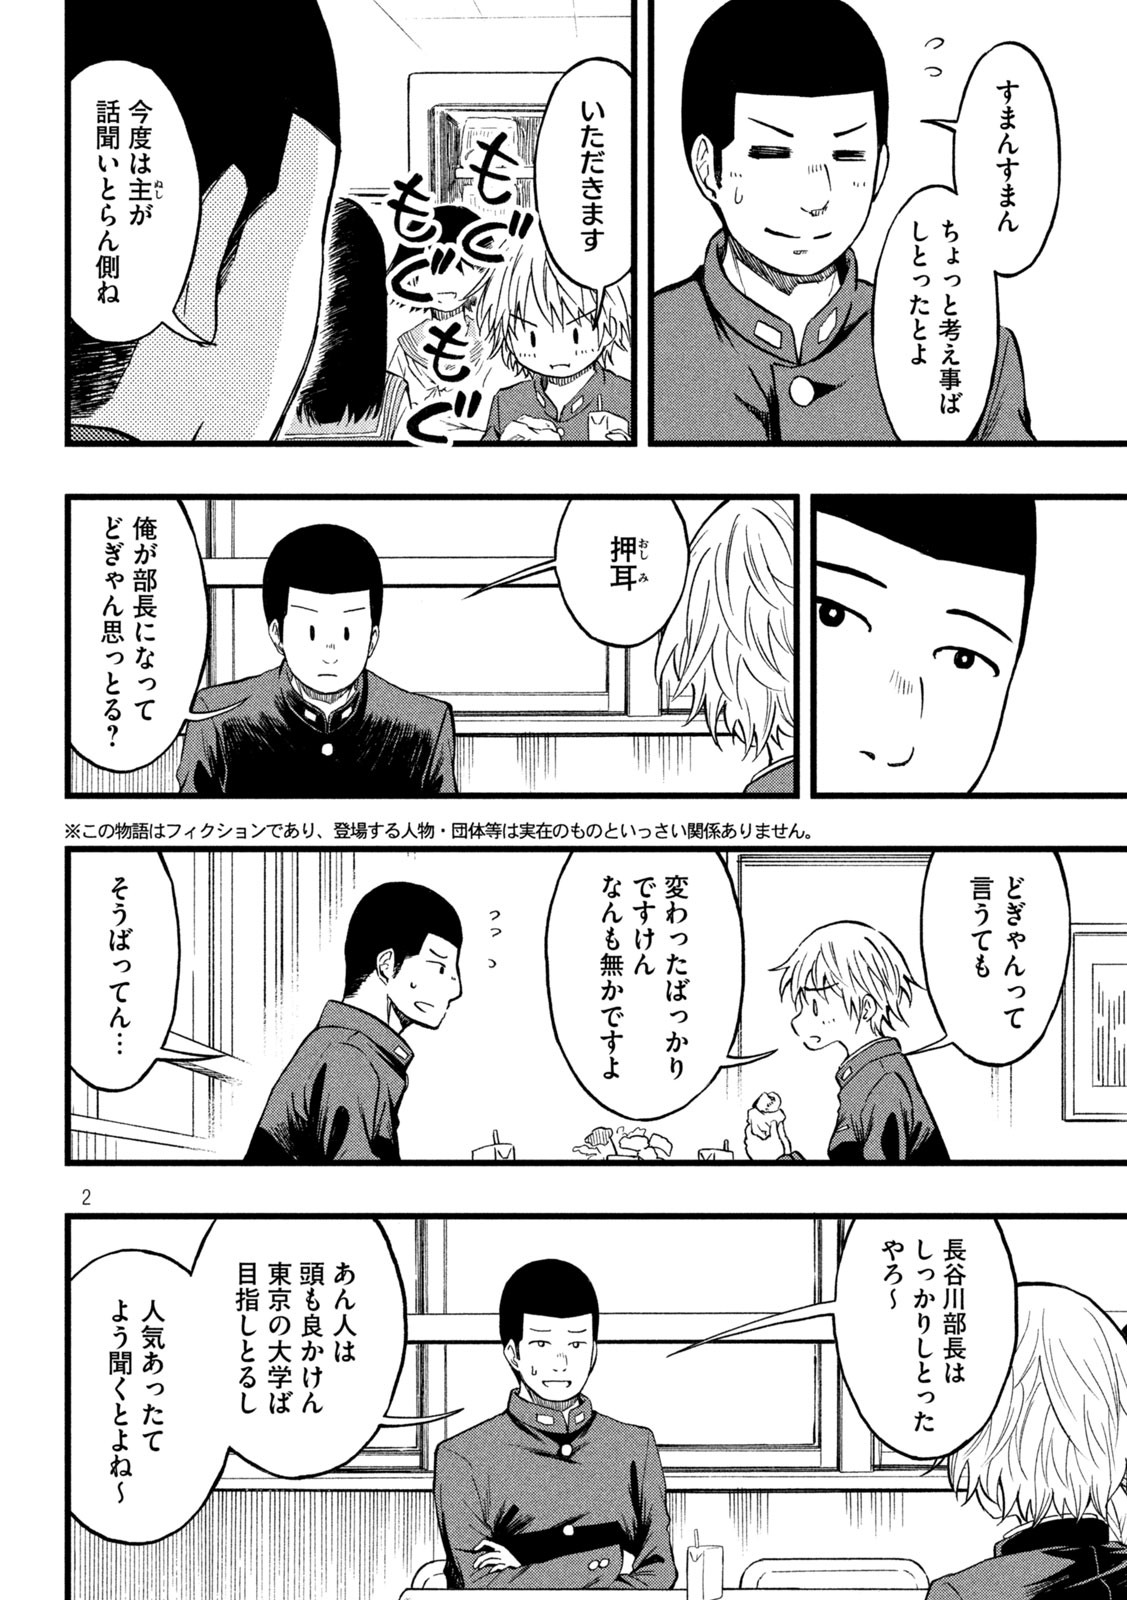 Koharu haru! - Chapter 45 - Page 2